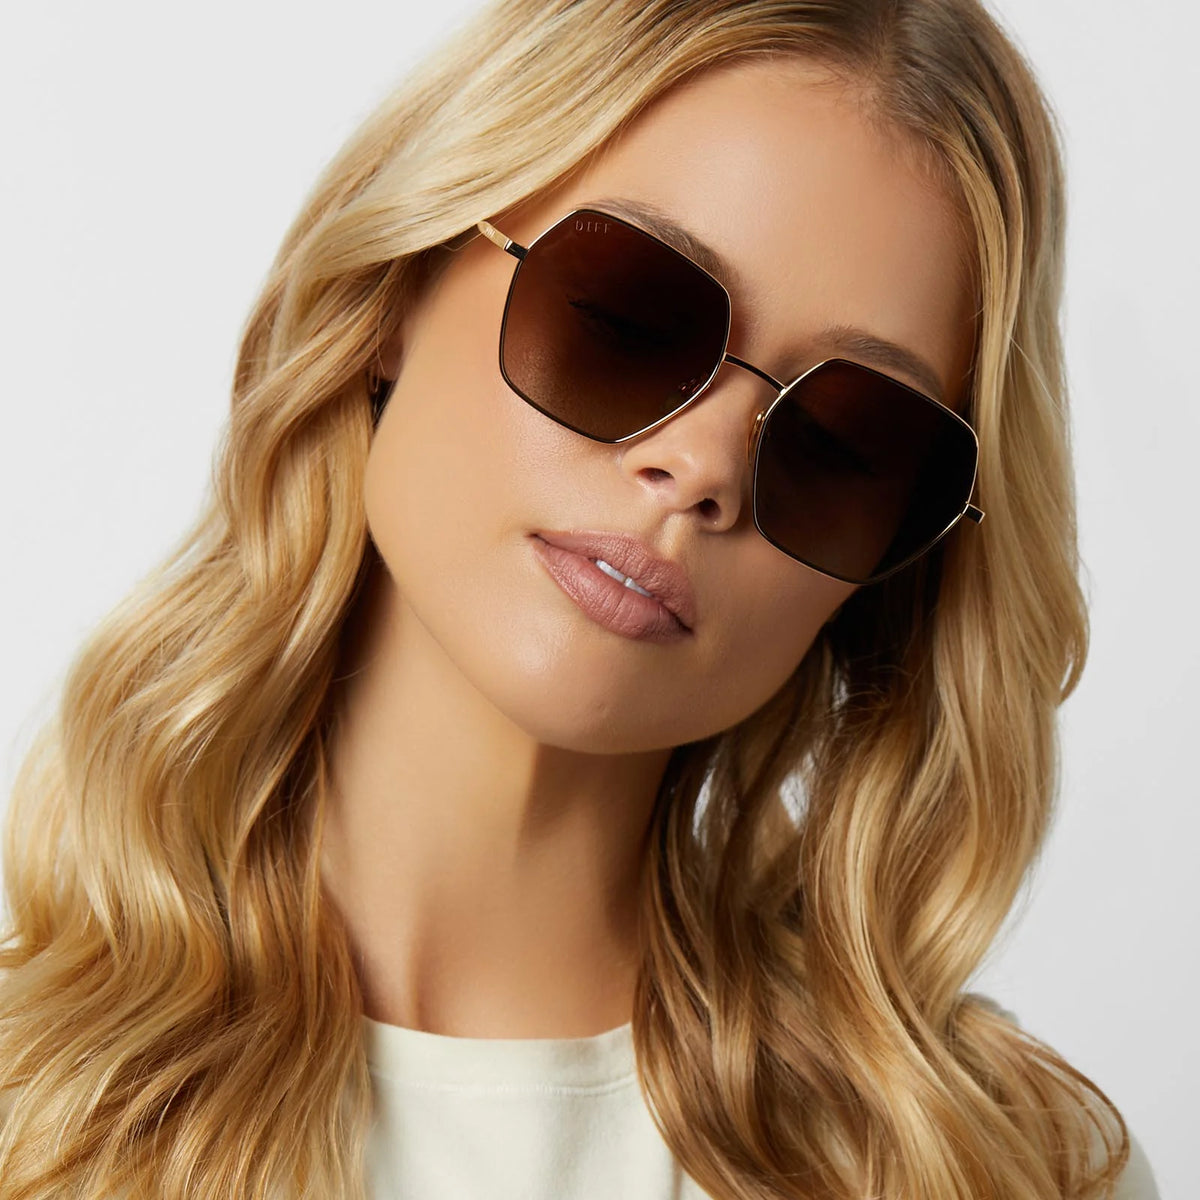 diff eyewear harlowe sunglasses in gold brown gradient polarized